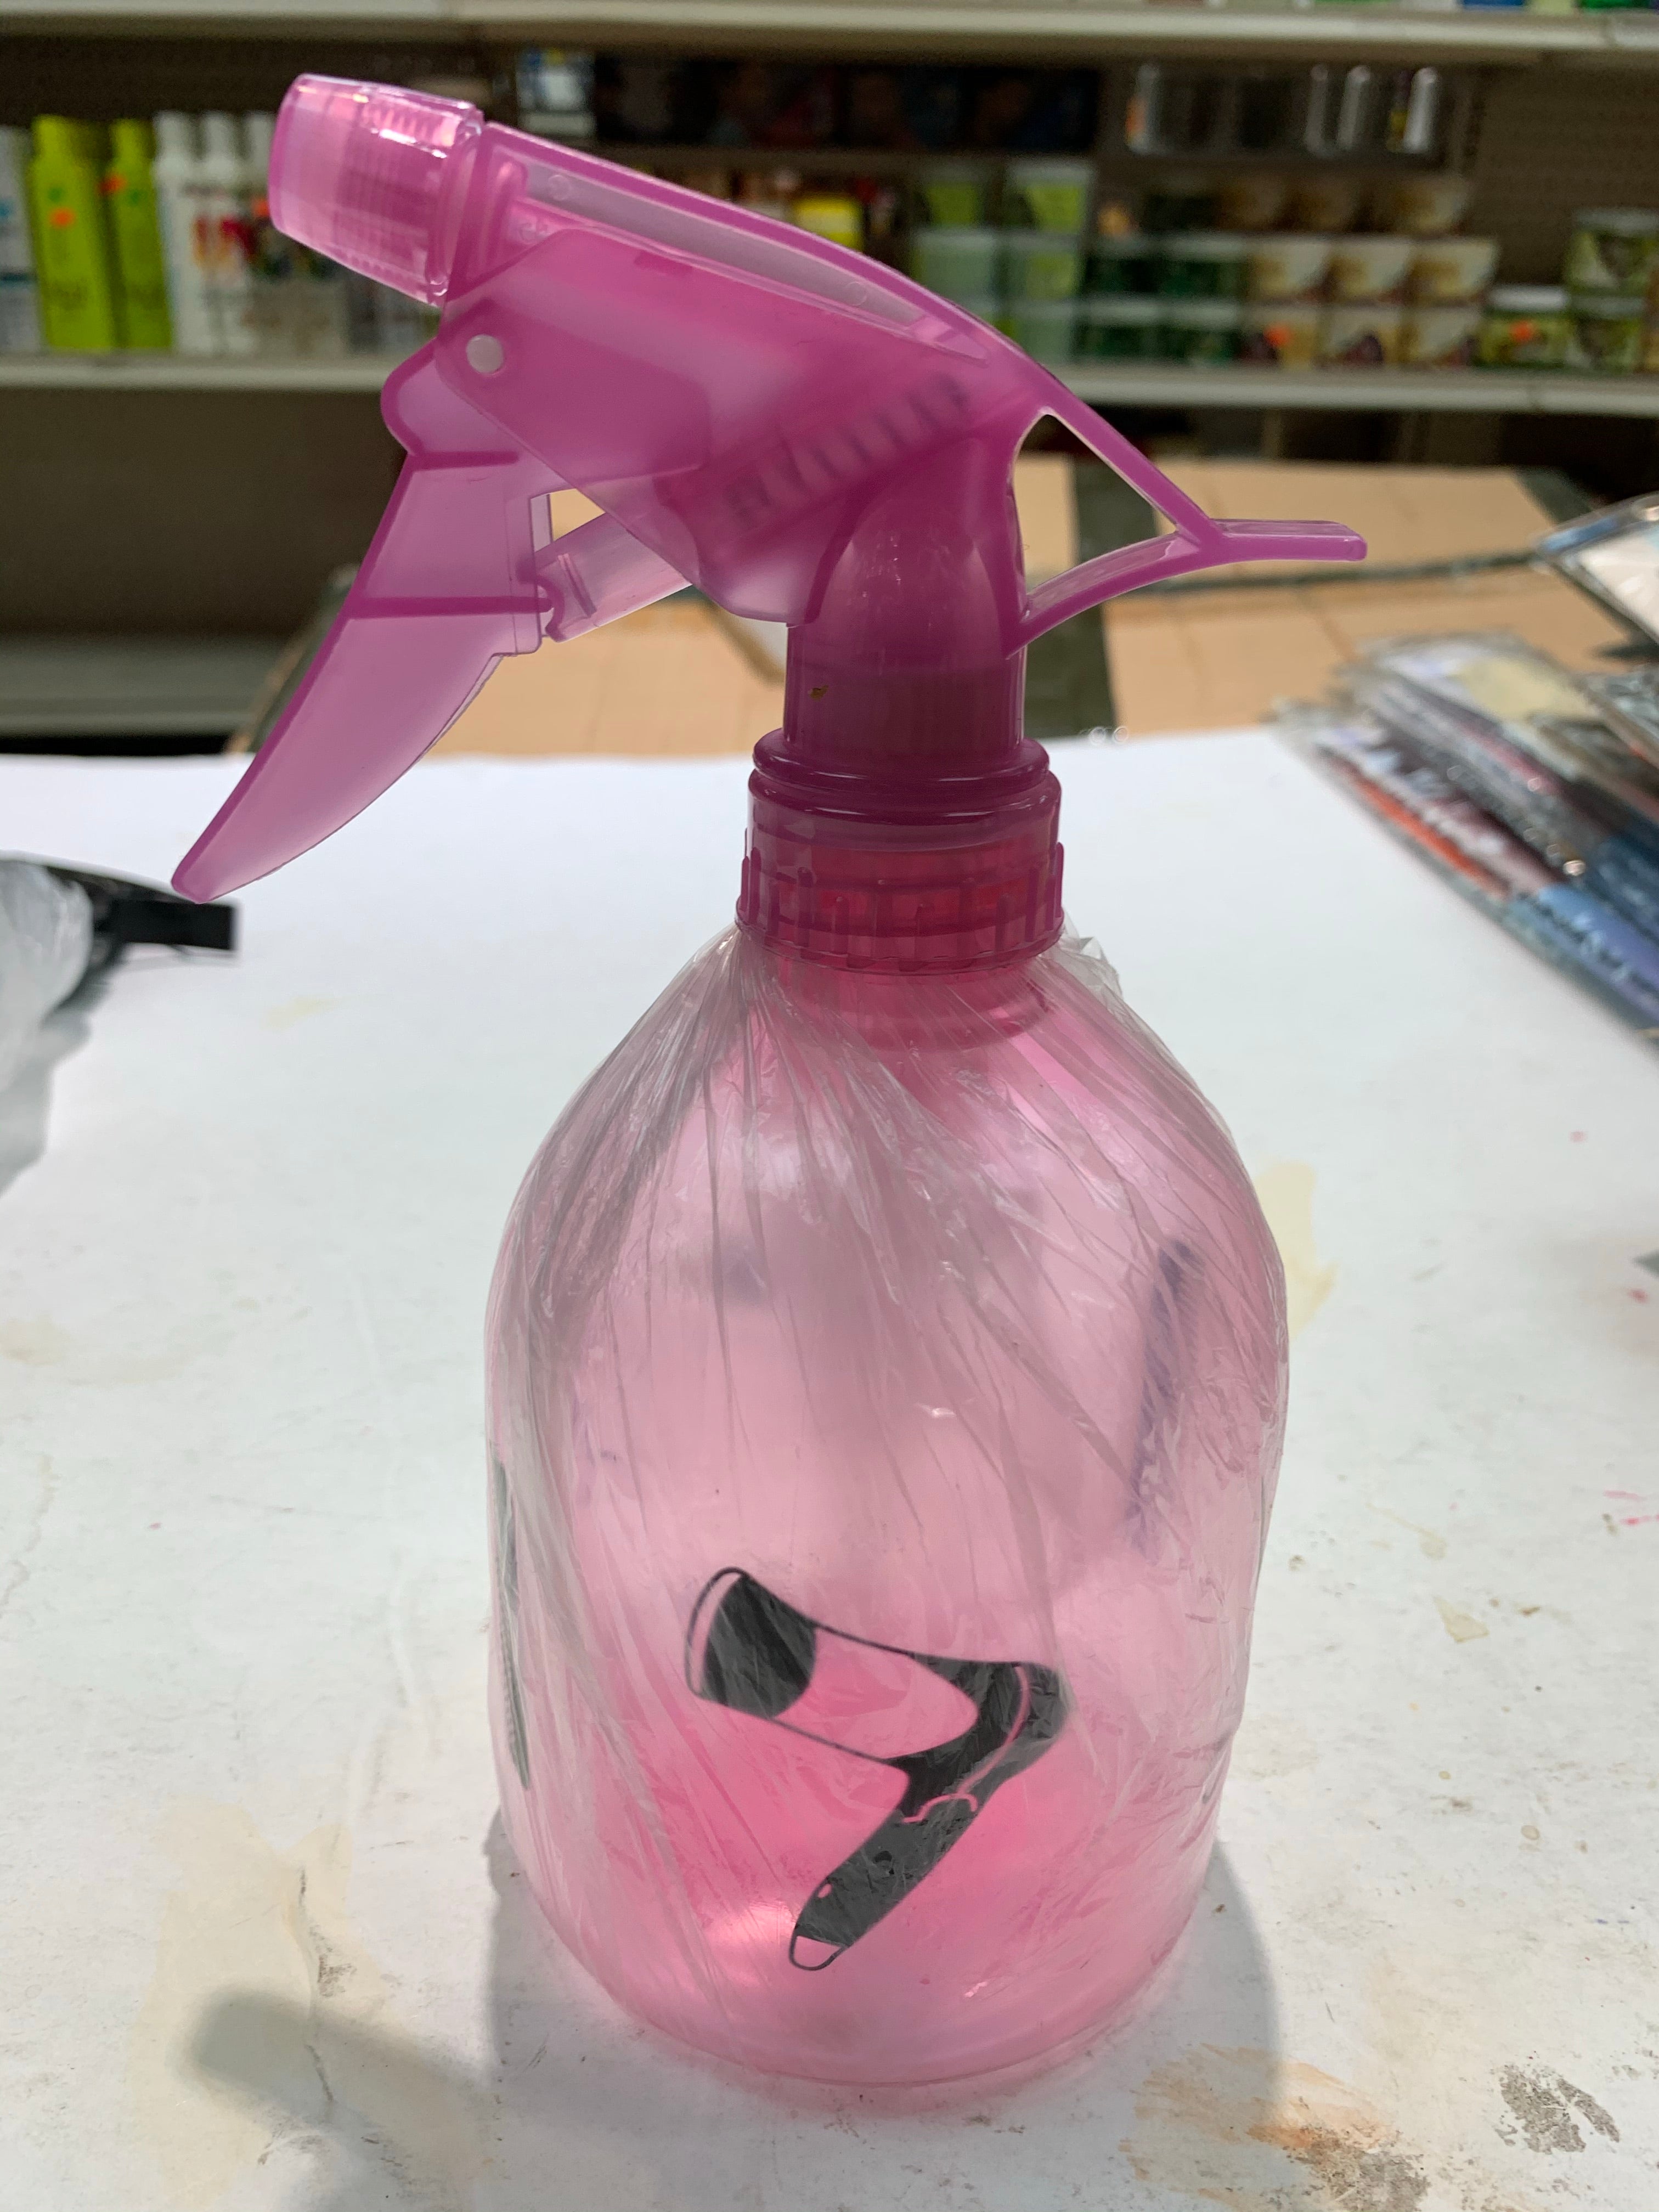 Salon quality spray bottle